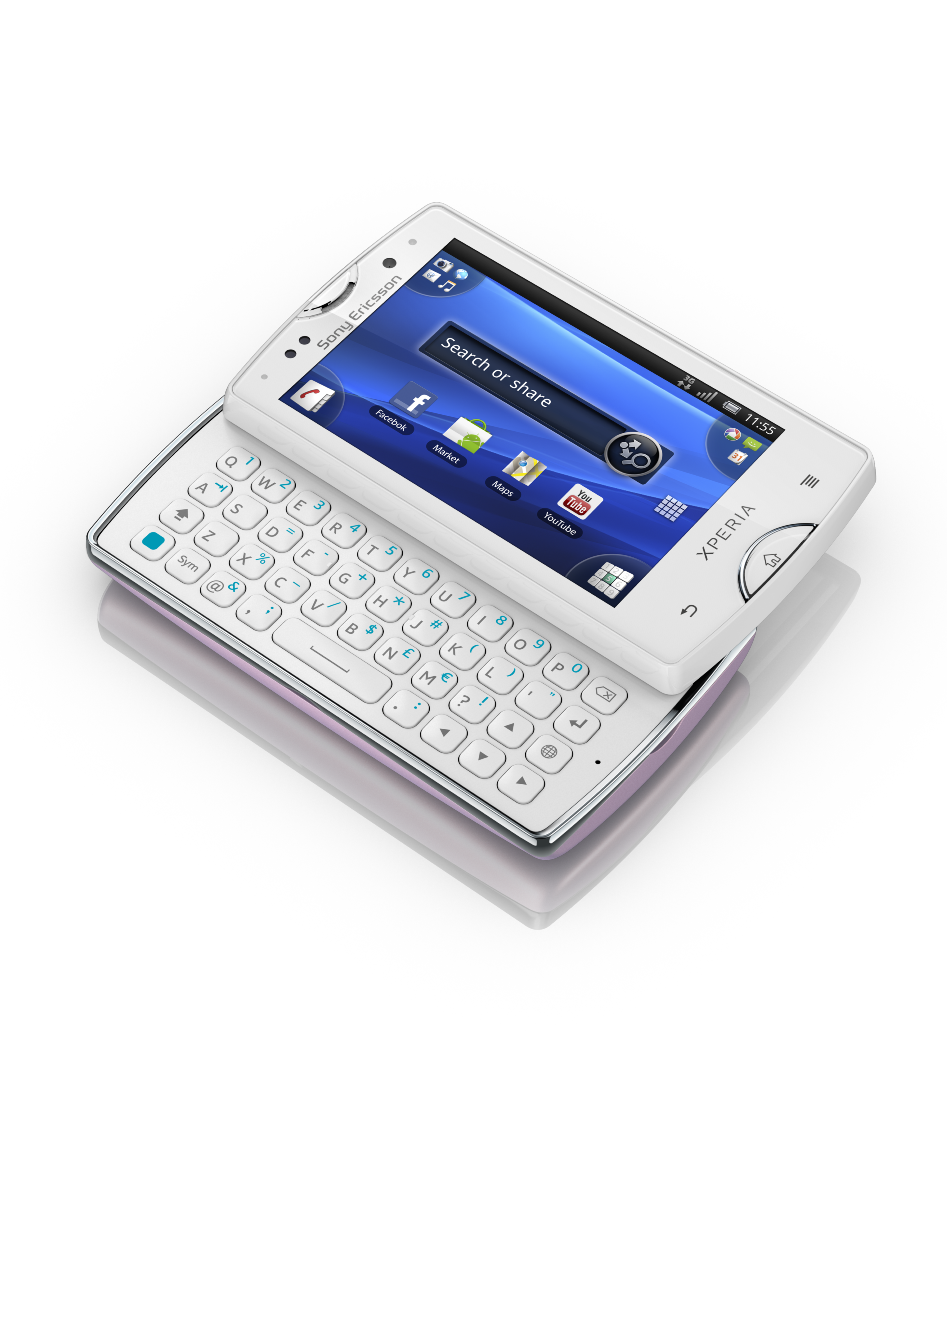 Sony Xperia Mini Pro. Sony Ericsson Xperia Mini. Sony Ericsson Xperia Mini Pro. Xperia Pro 1. Sony xperia mini